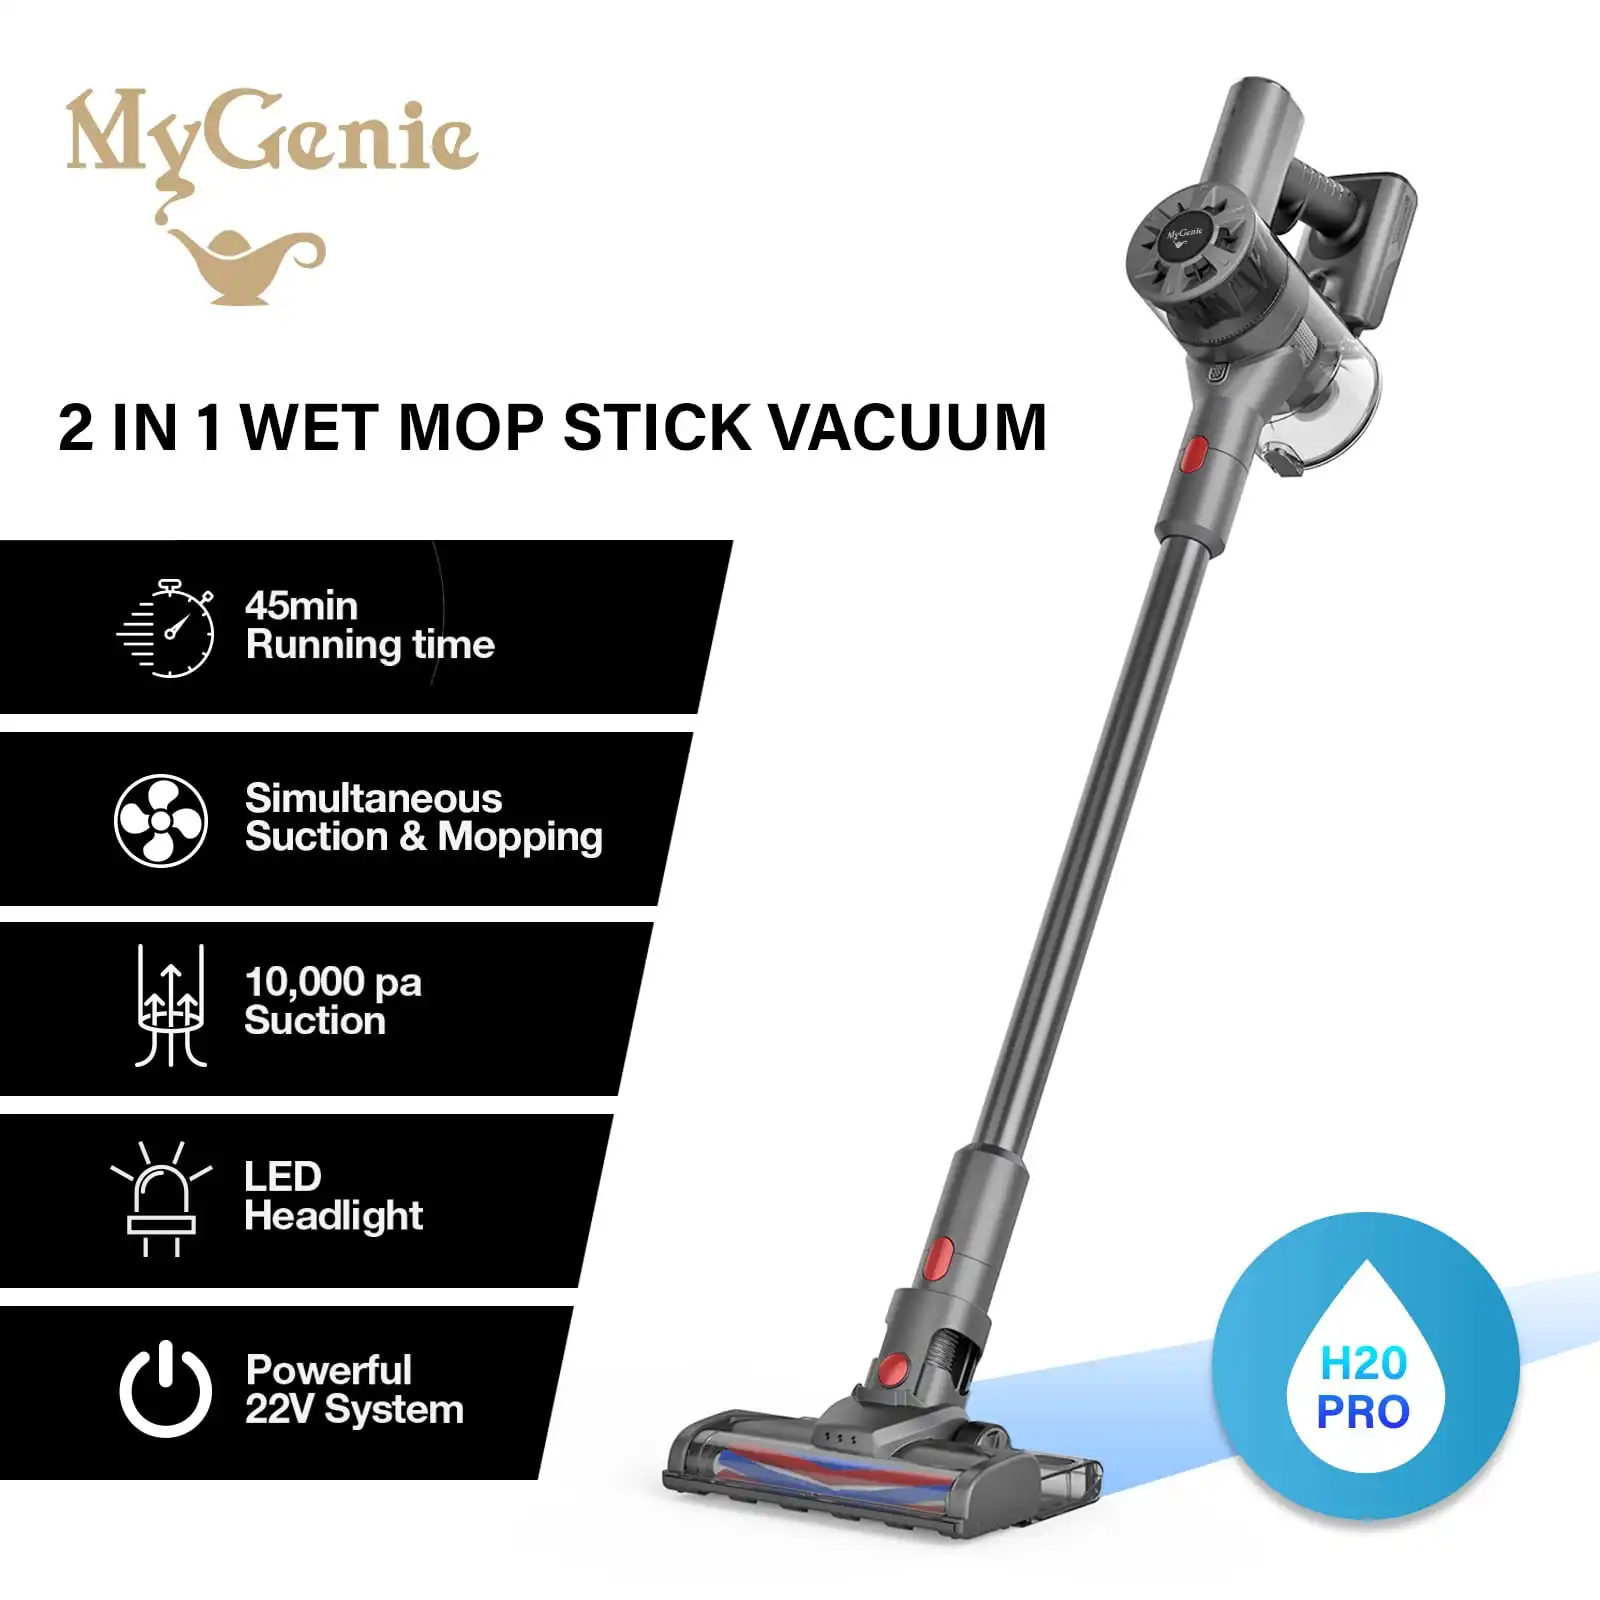 My Genie H20 Pro Wet Mop Stick Vacuum with Mop (Grey)